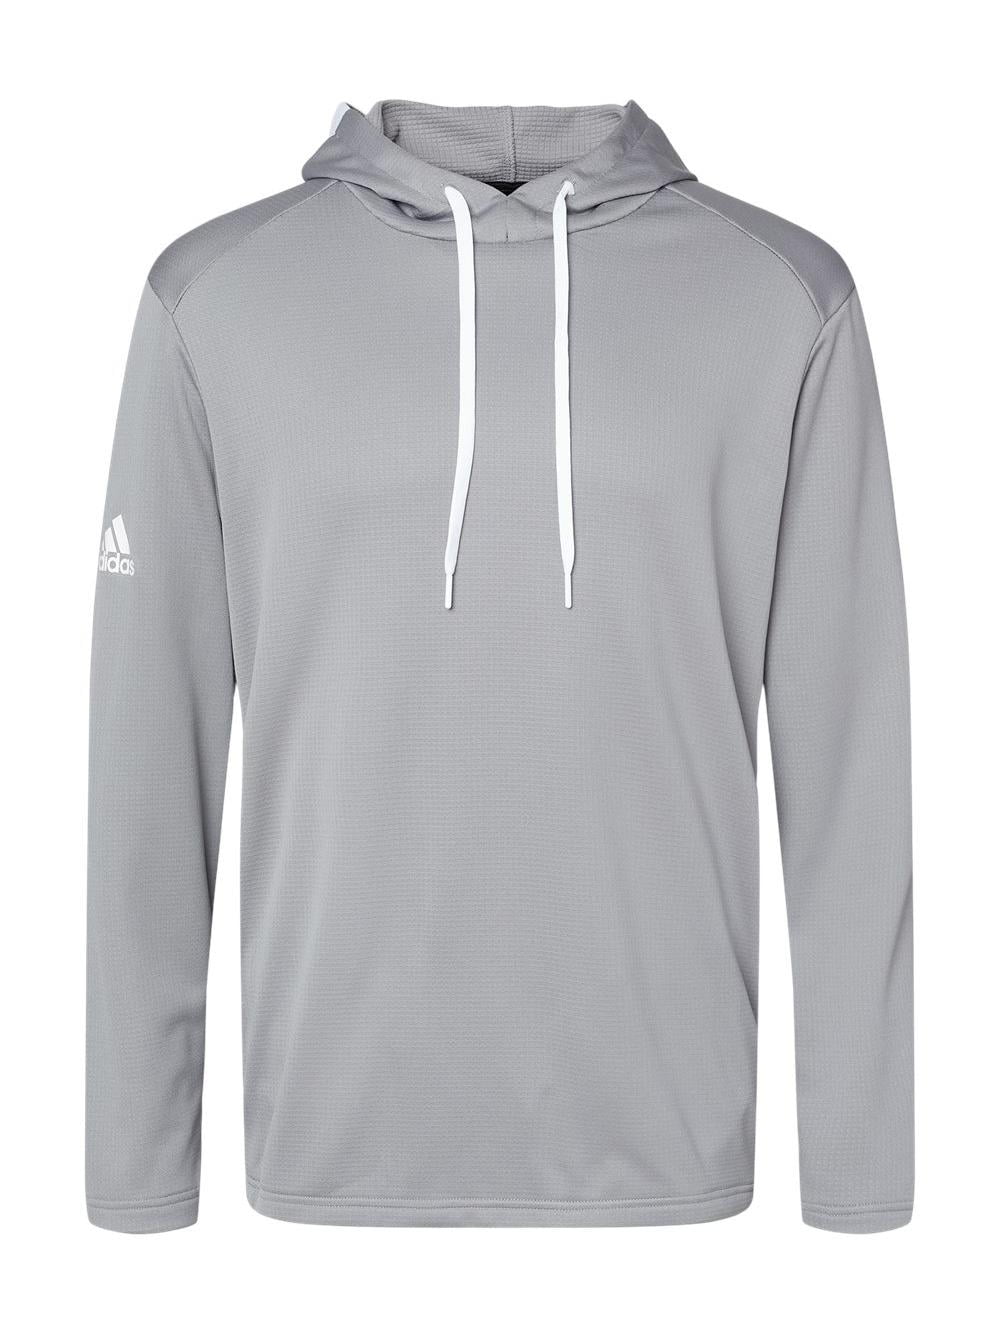 thee Luxe spoelen Adidas - Textured Mixed Media Hooded Sweatshirt - A530 - Grey Three - Size:  S - Walmart.com